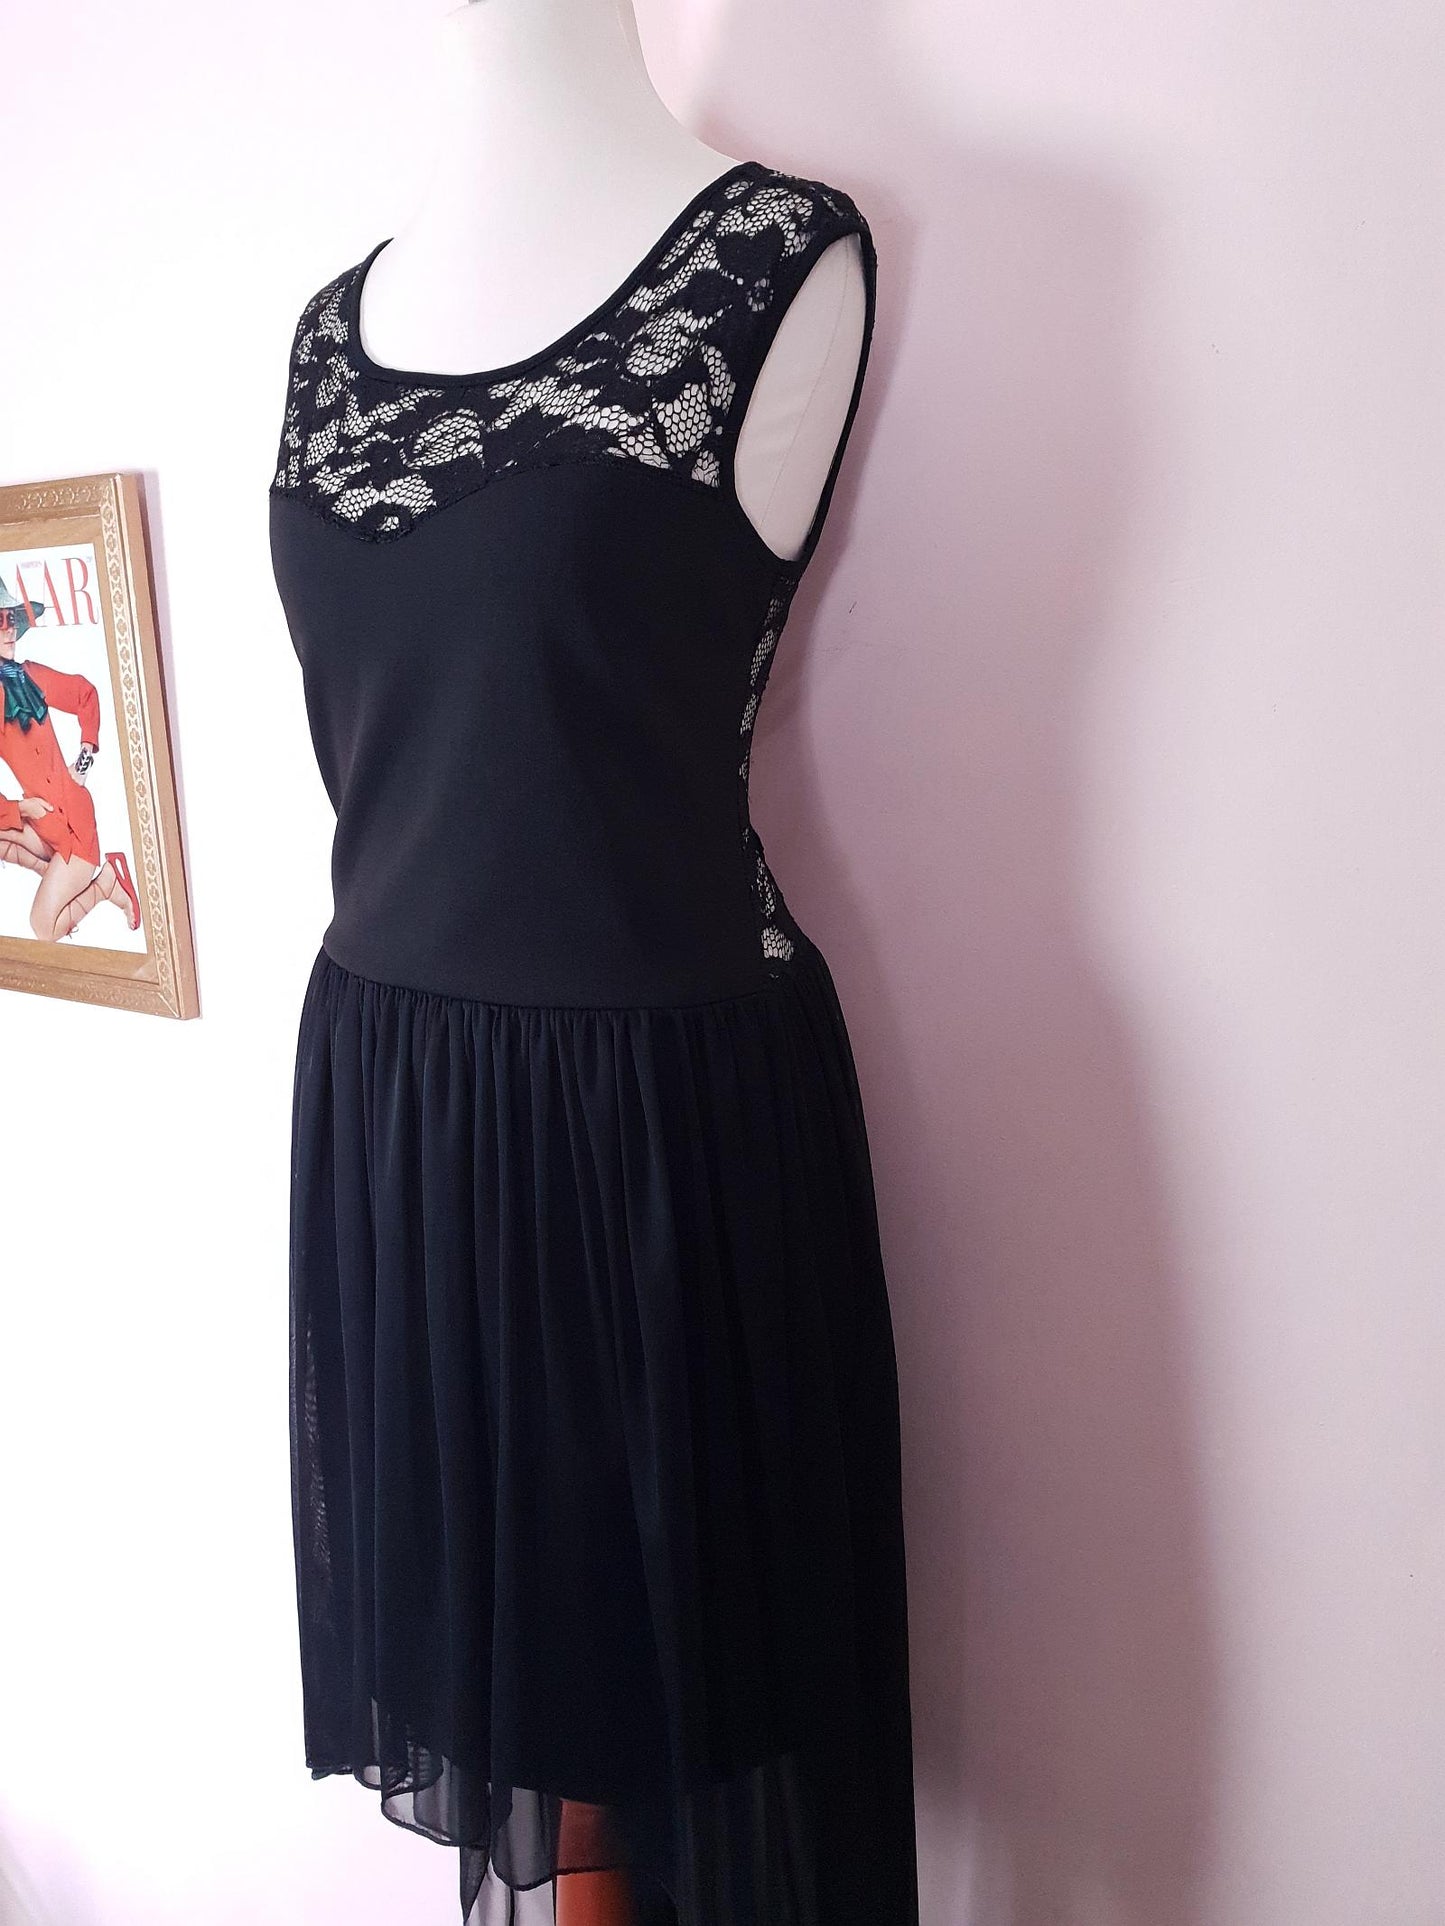 Vintage 90s Black Evening Dress Size 12 LBD Fit & Flare Lace Chiffon Party